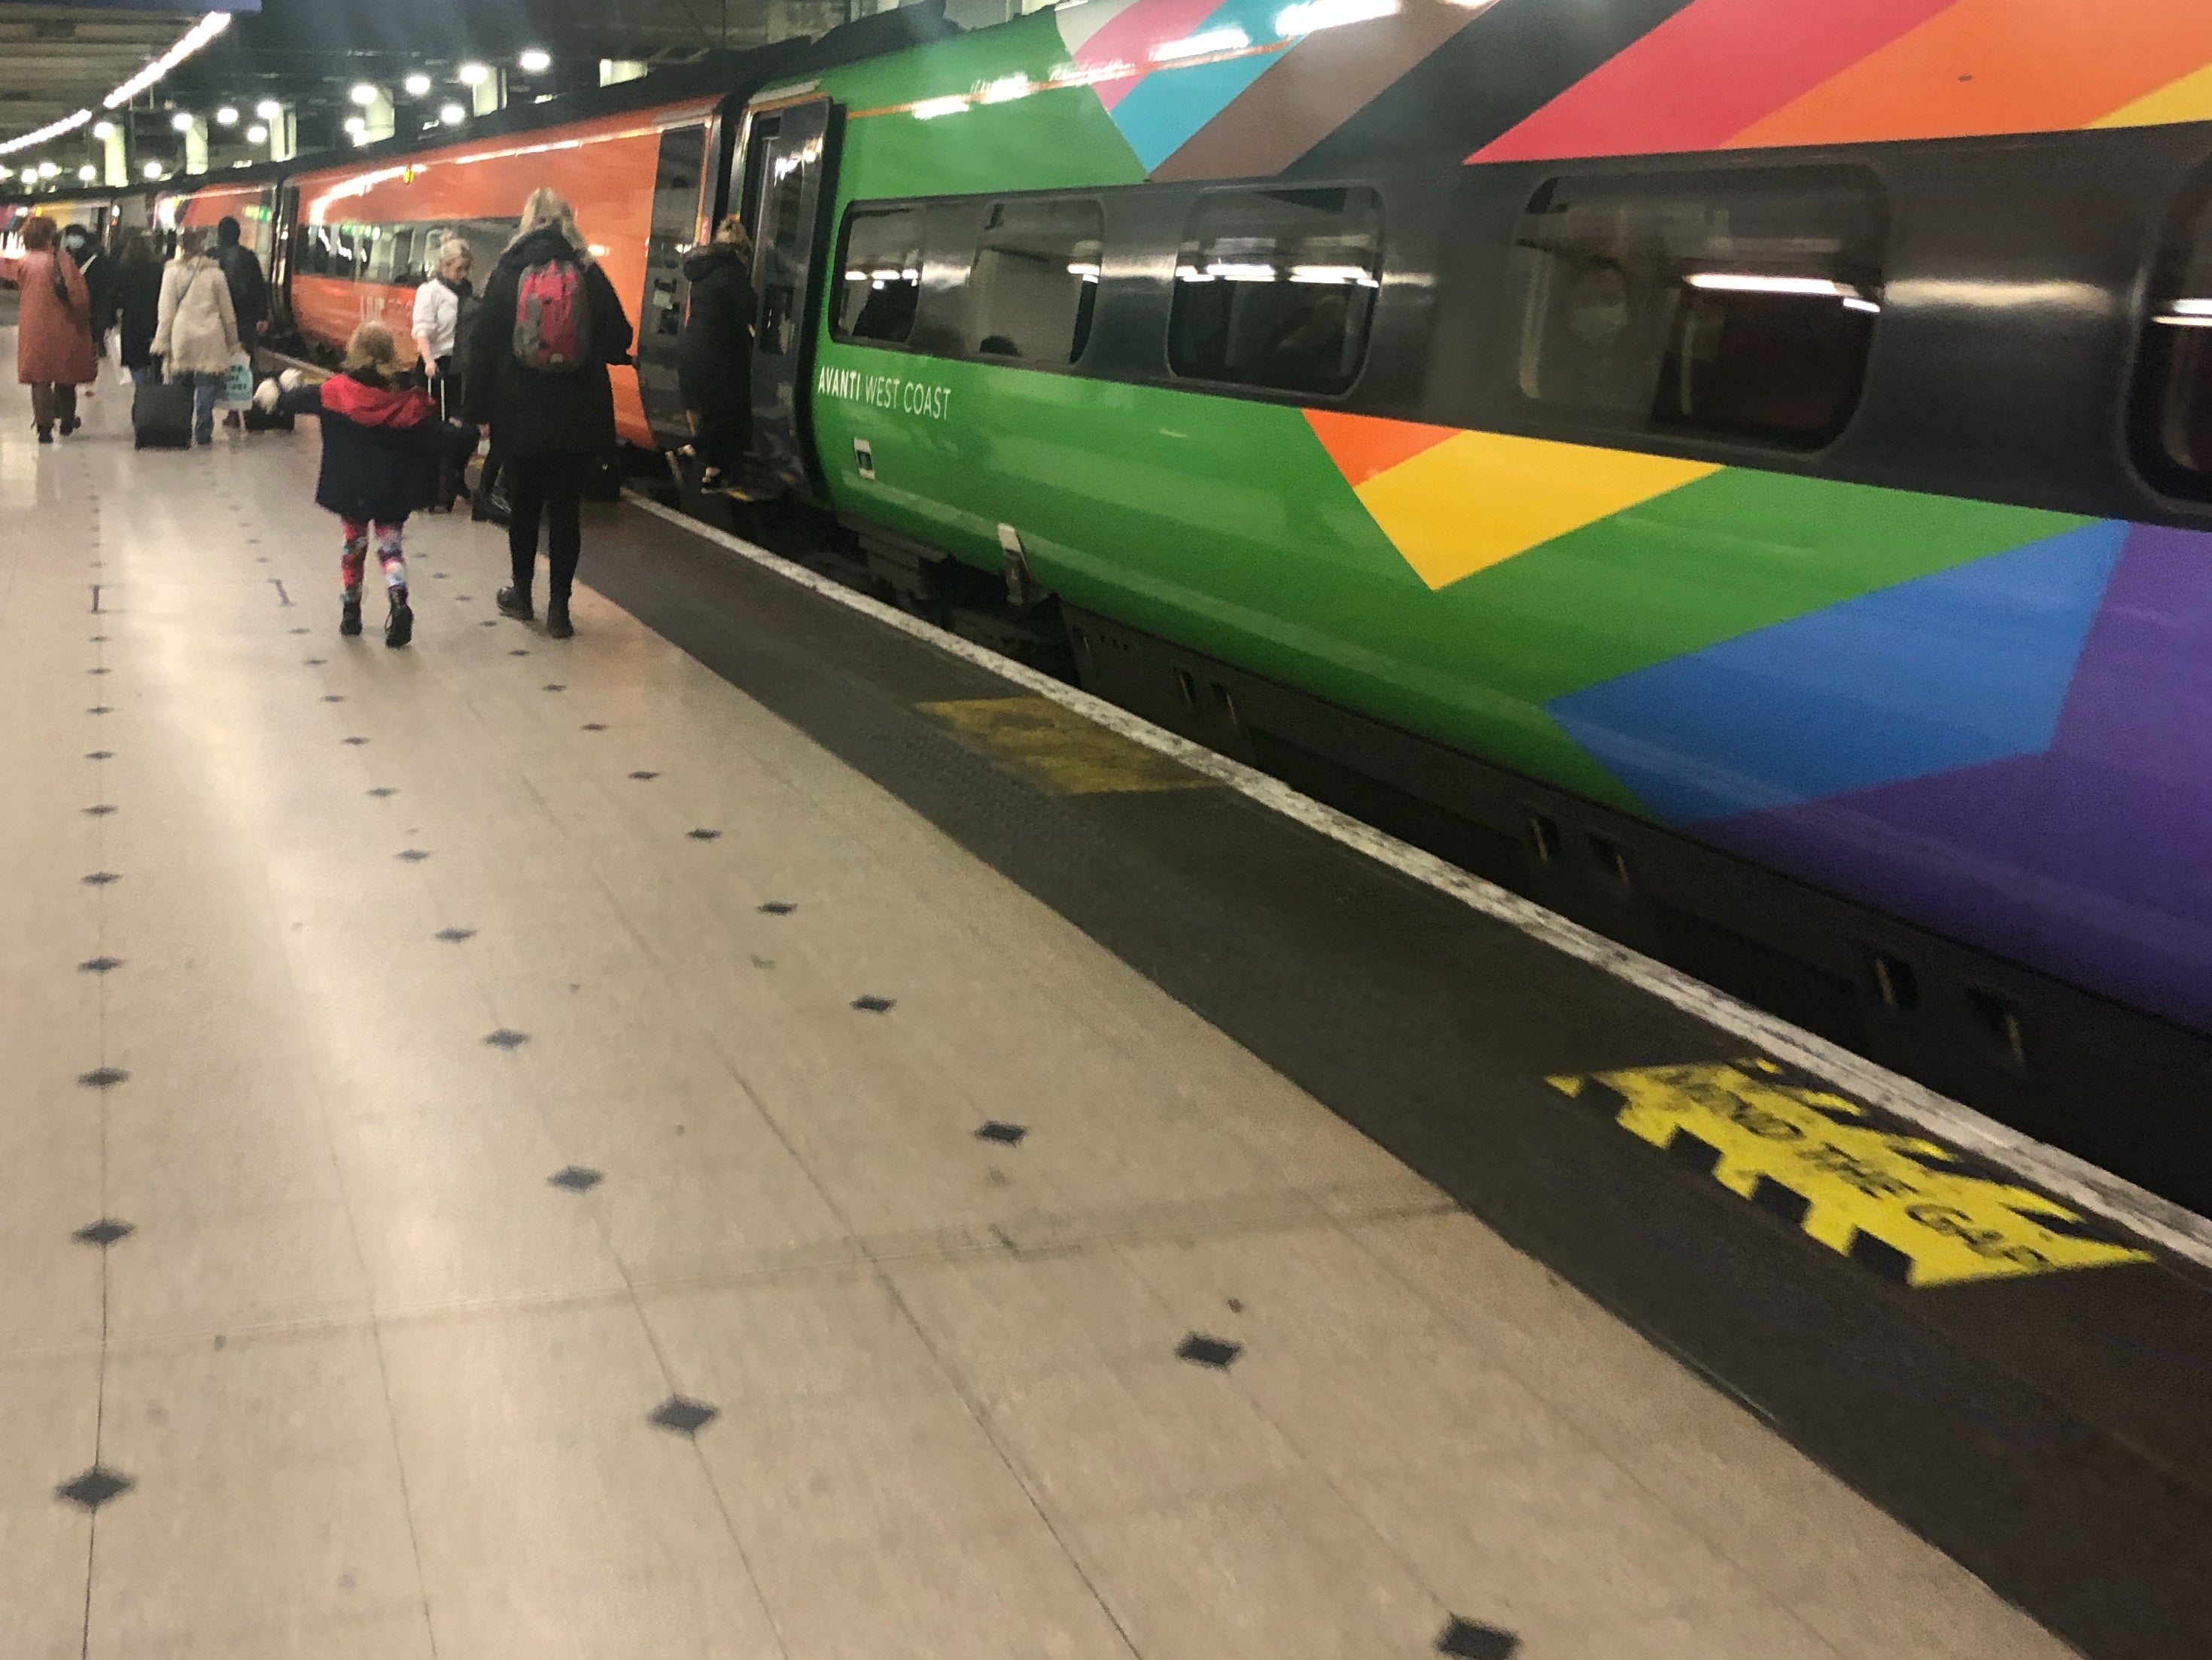 Travel with pride: Avanti West Coast’s “Pride Train” at London Euston station